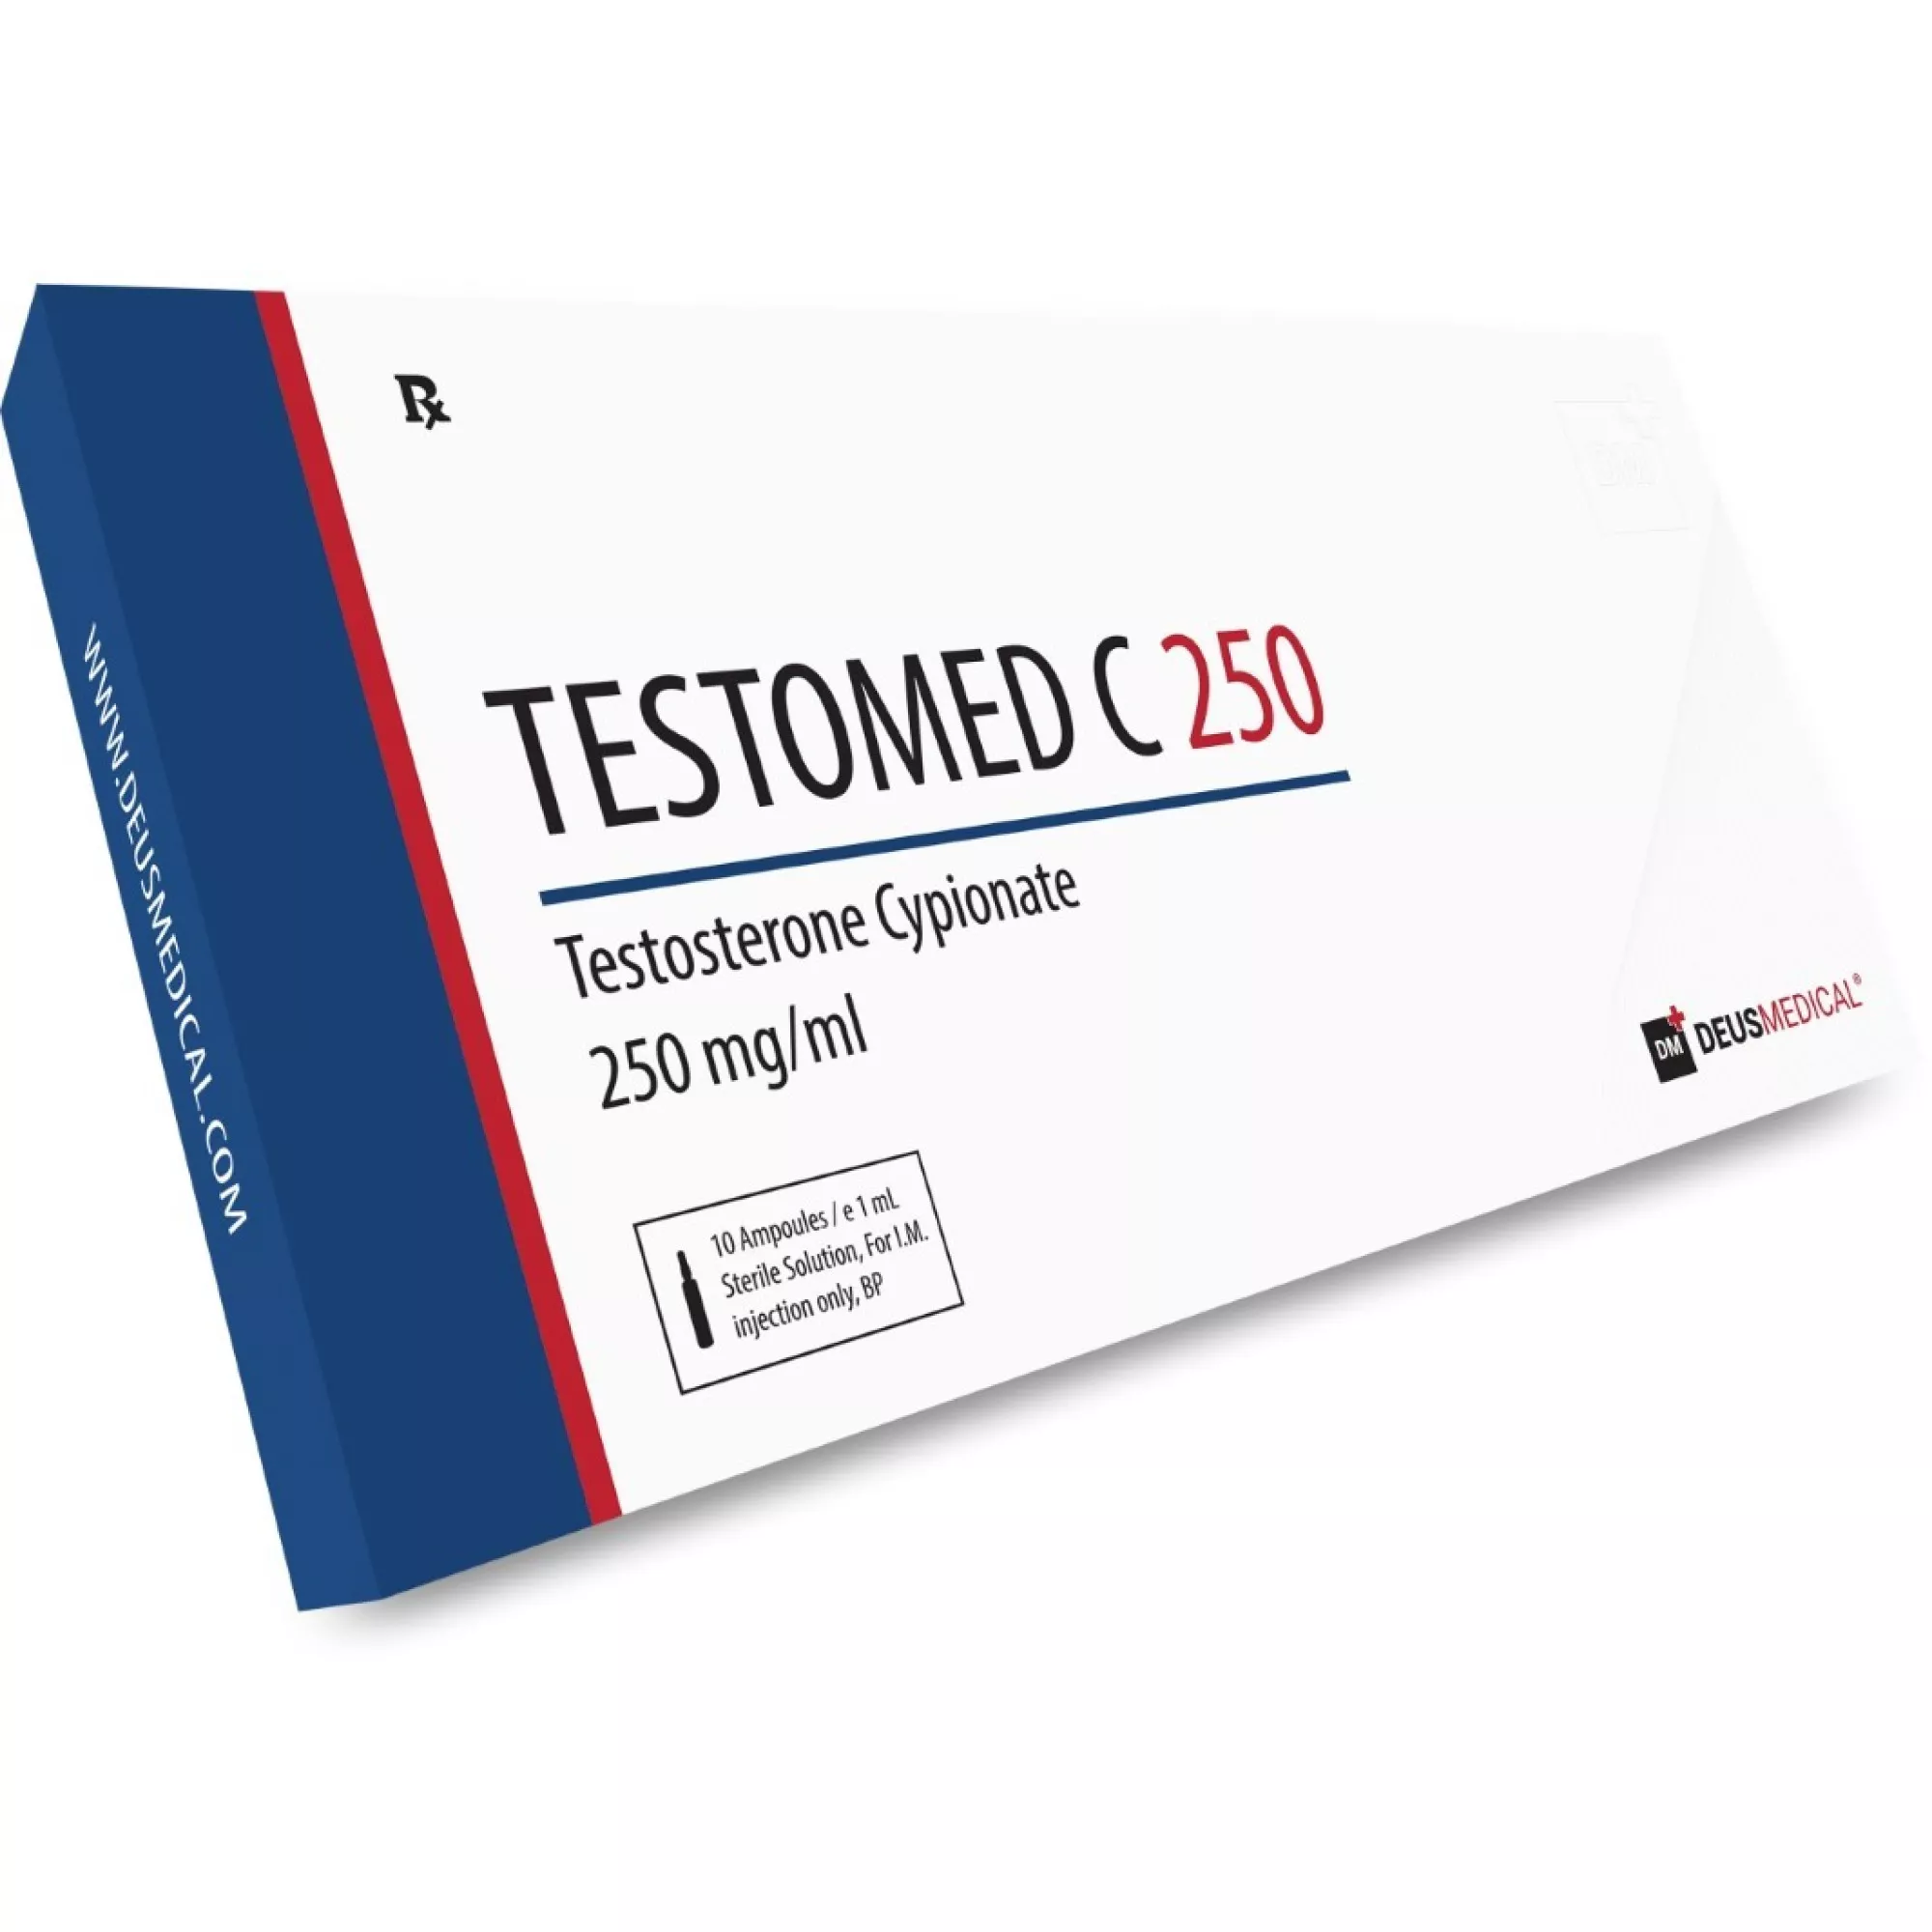 TESTOMED C 250 (Testosterone Cypionate), Deus Medical, Buy Steroids Online - www.deuspower.shop